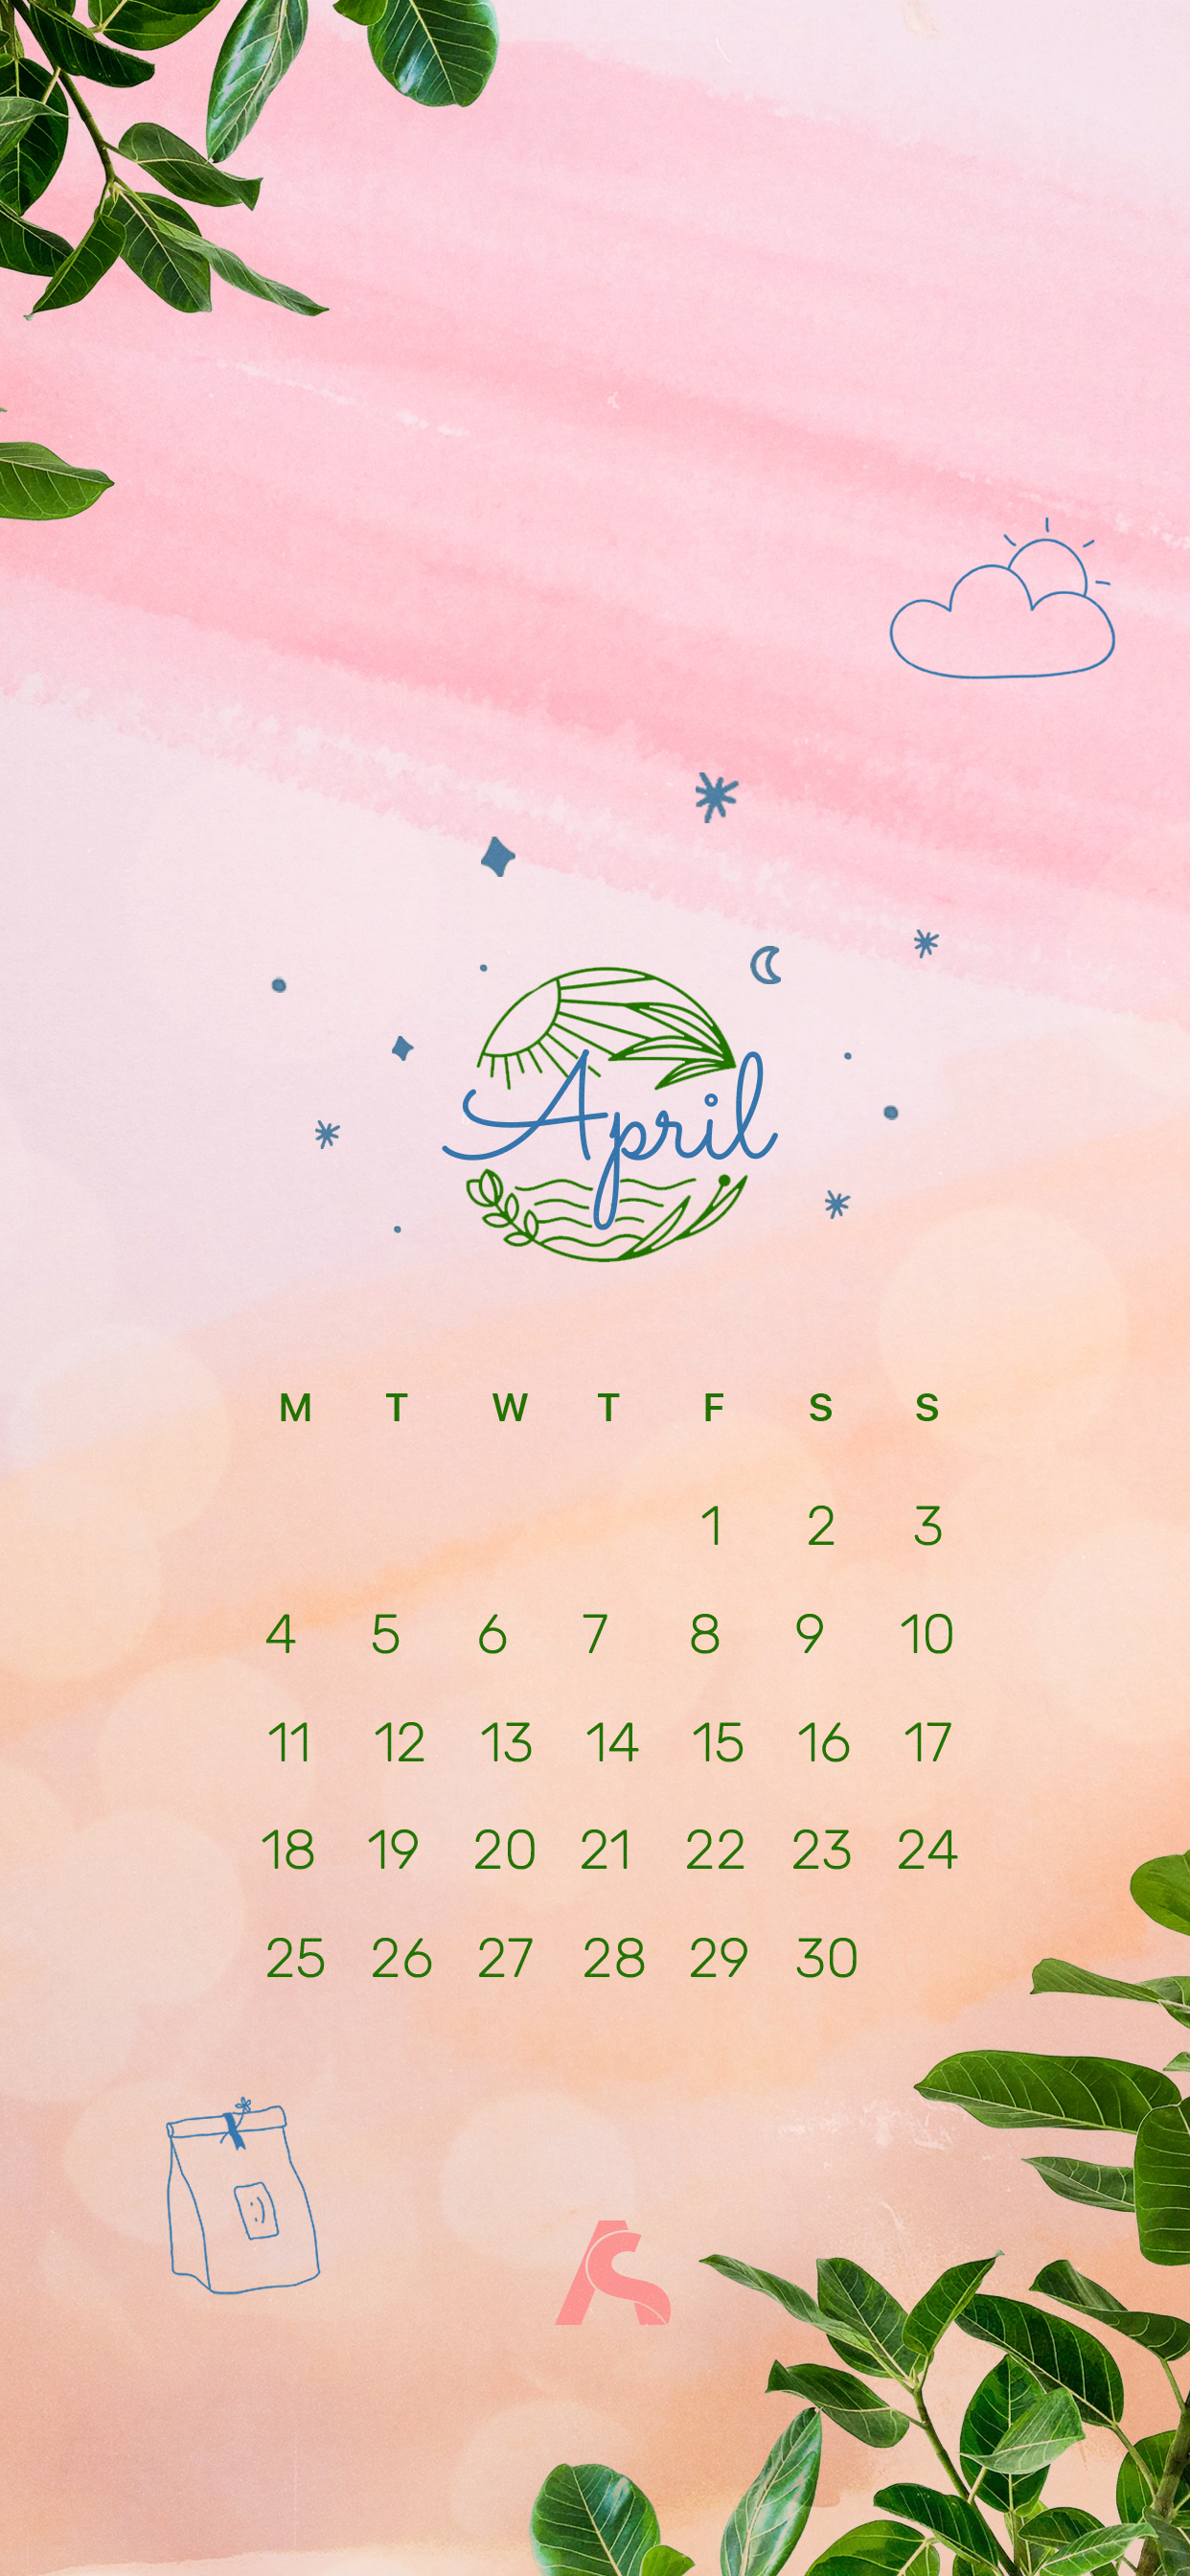 April Iphone Calendar Wallpaper in HD Quality 10  Calendar wallpaper Cute  wallpaper for phone Iphone wallpaper